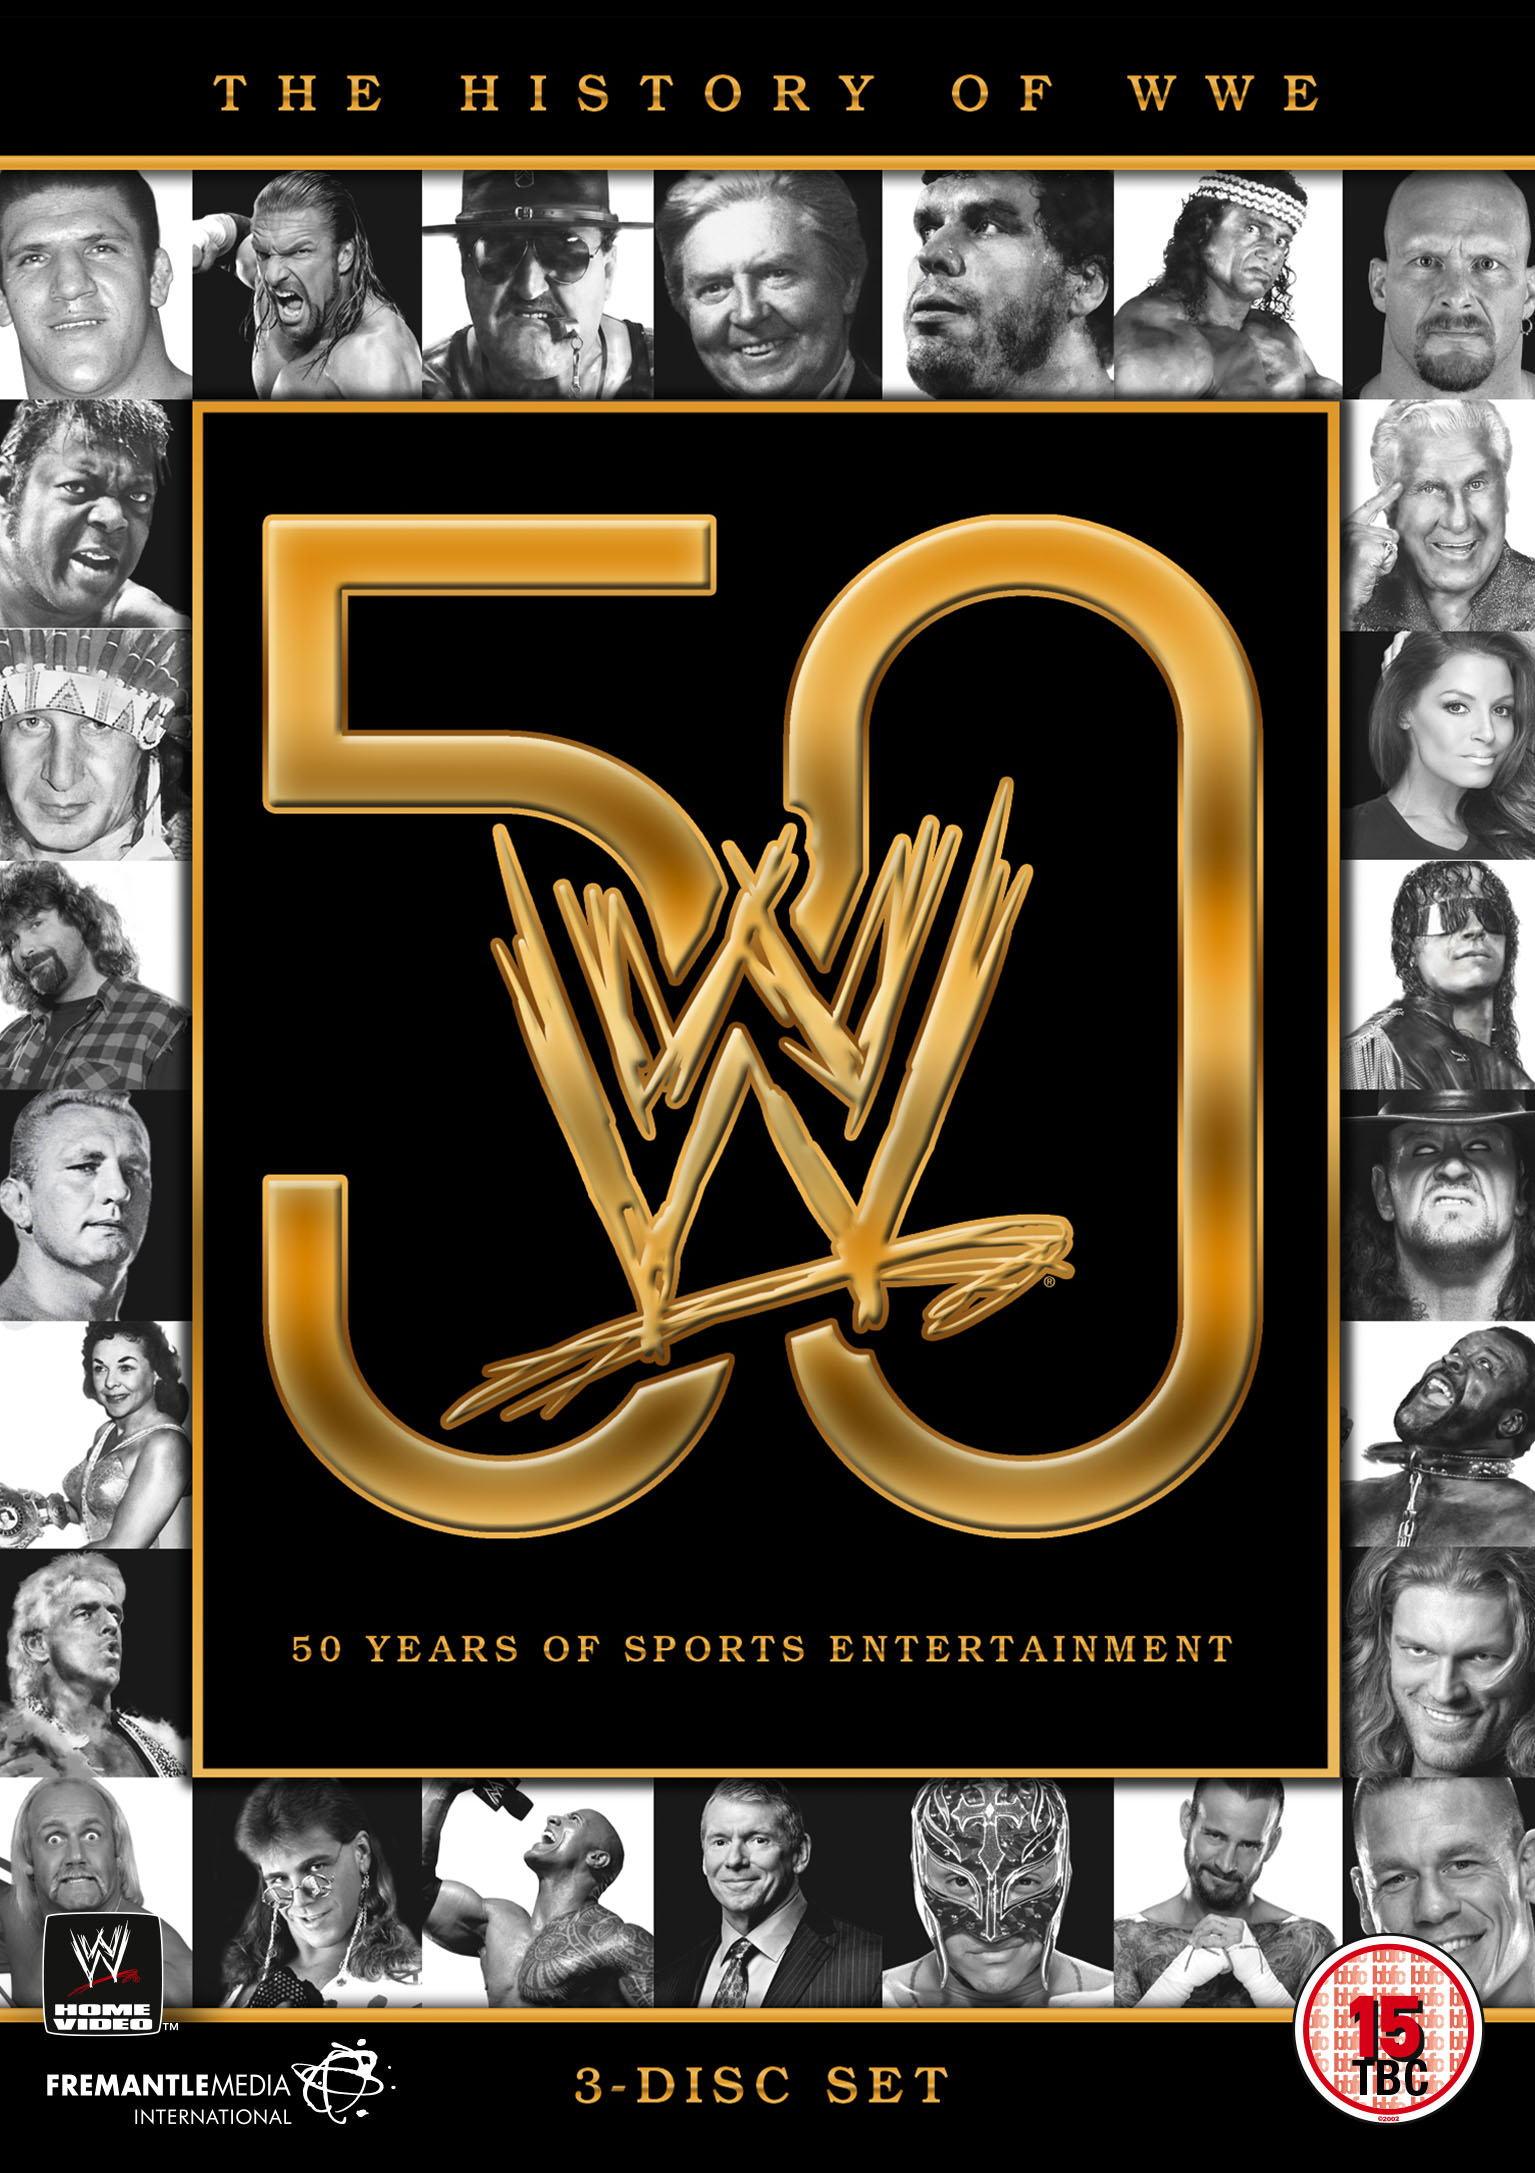 HIST OF WWE DVD 2D 1 